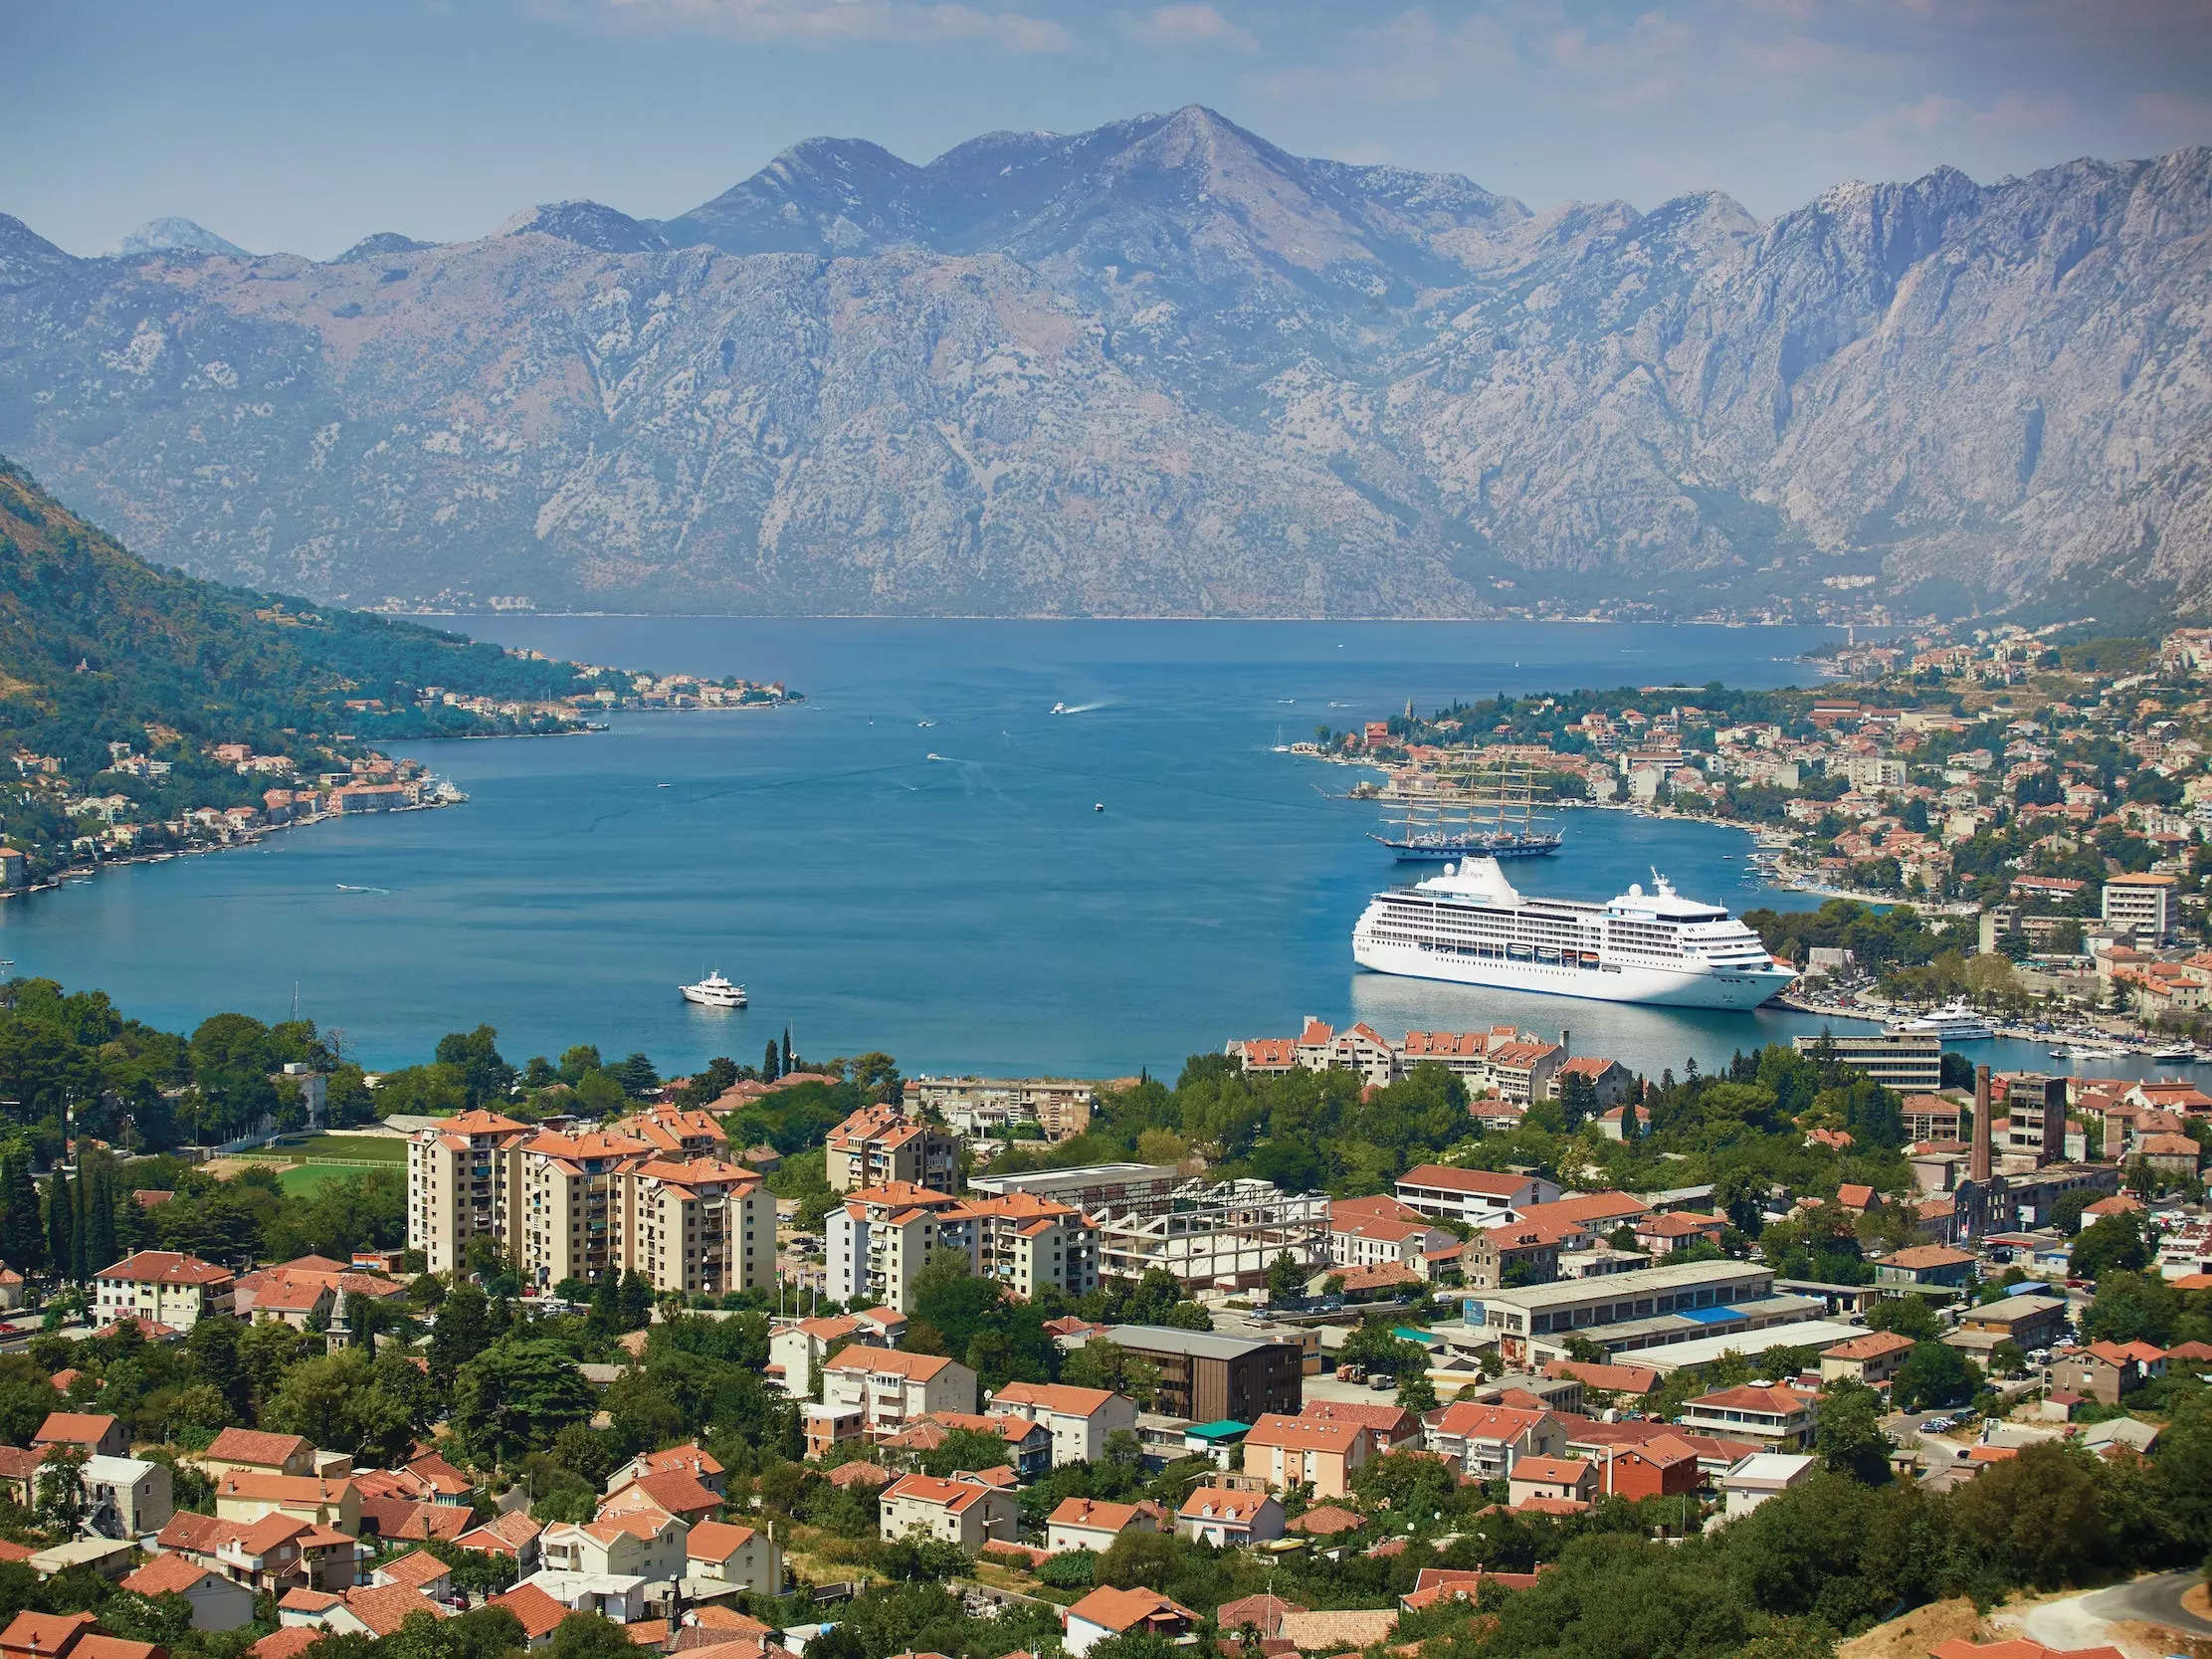 Seven Seas Mariner docked in Kotor, Montenegro